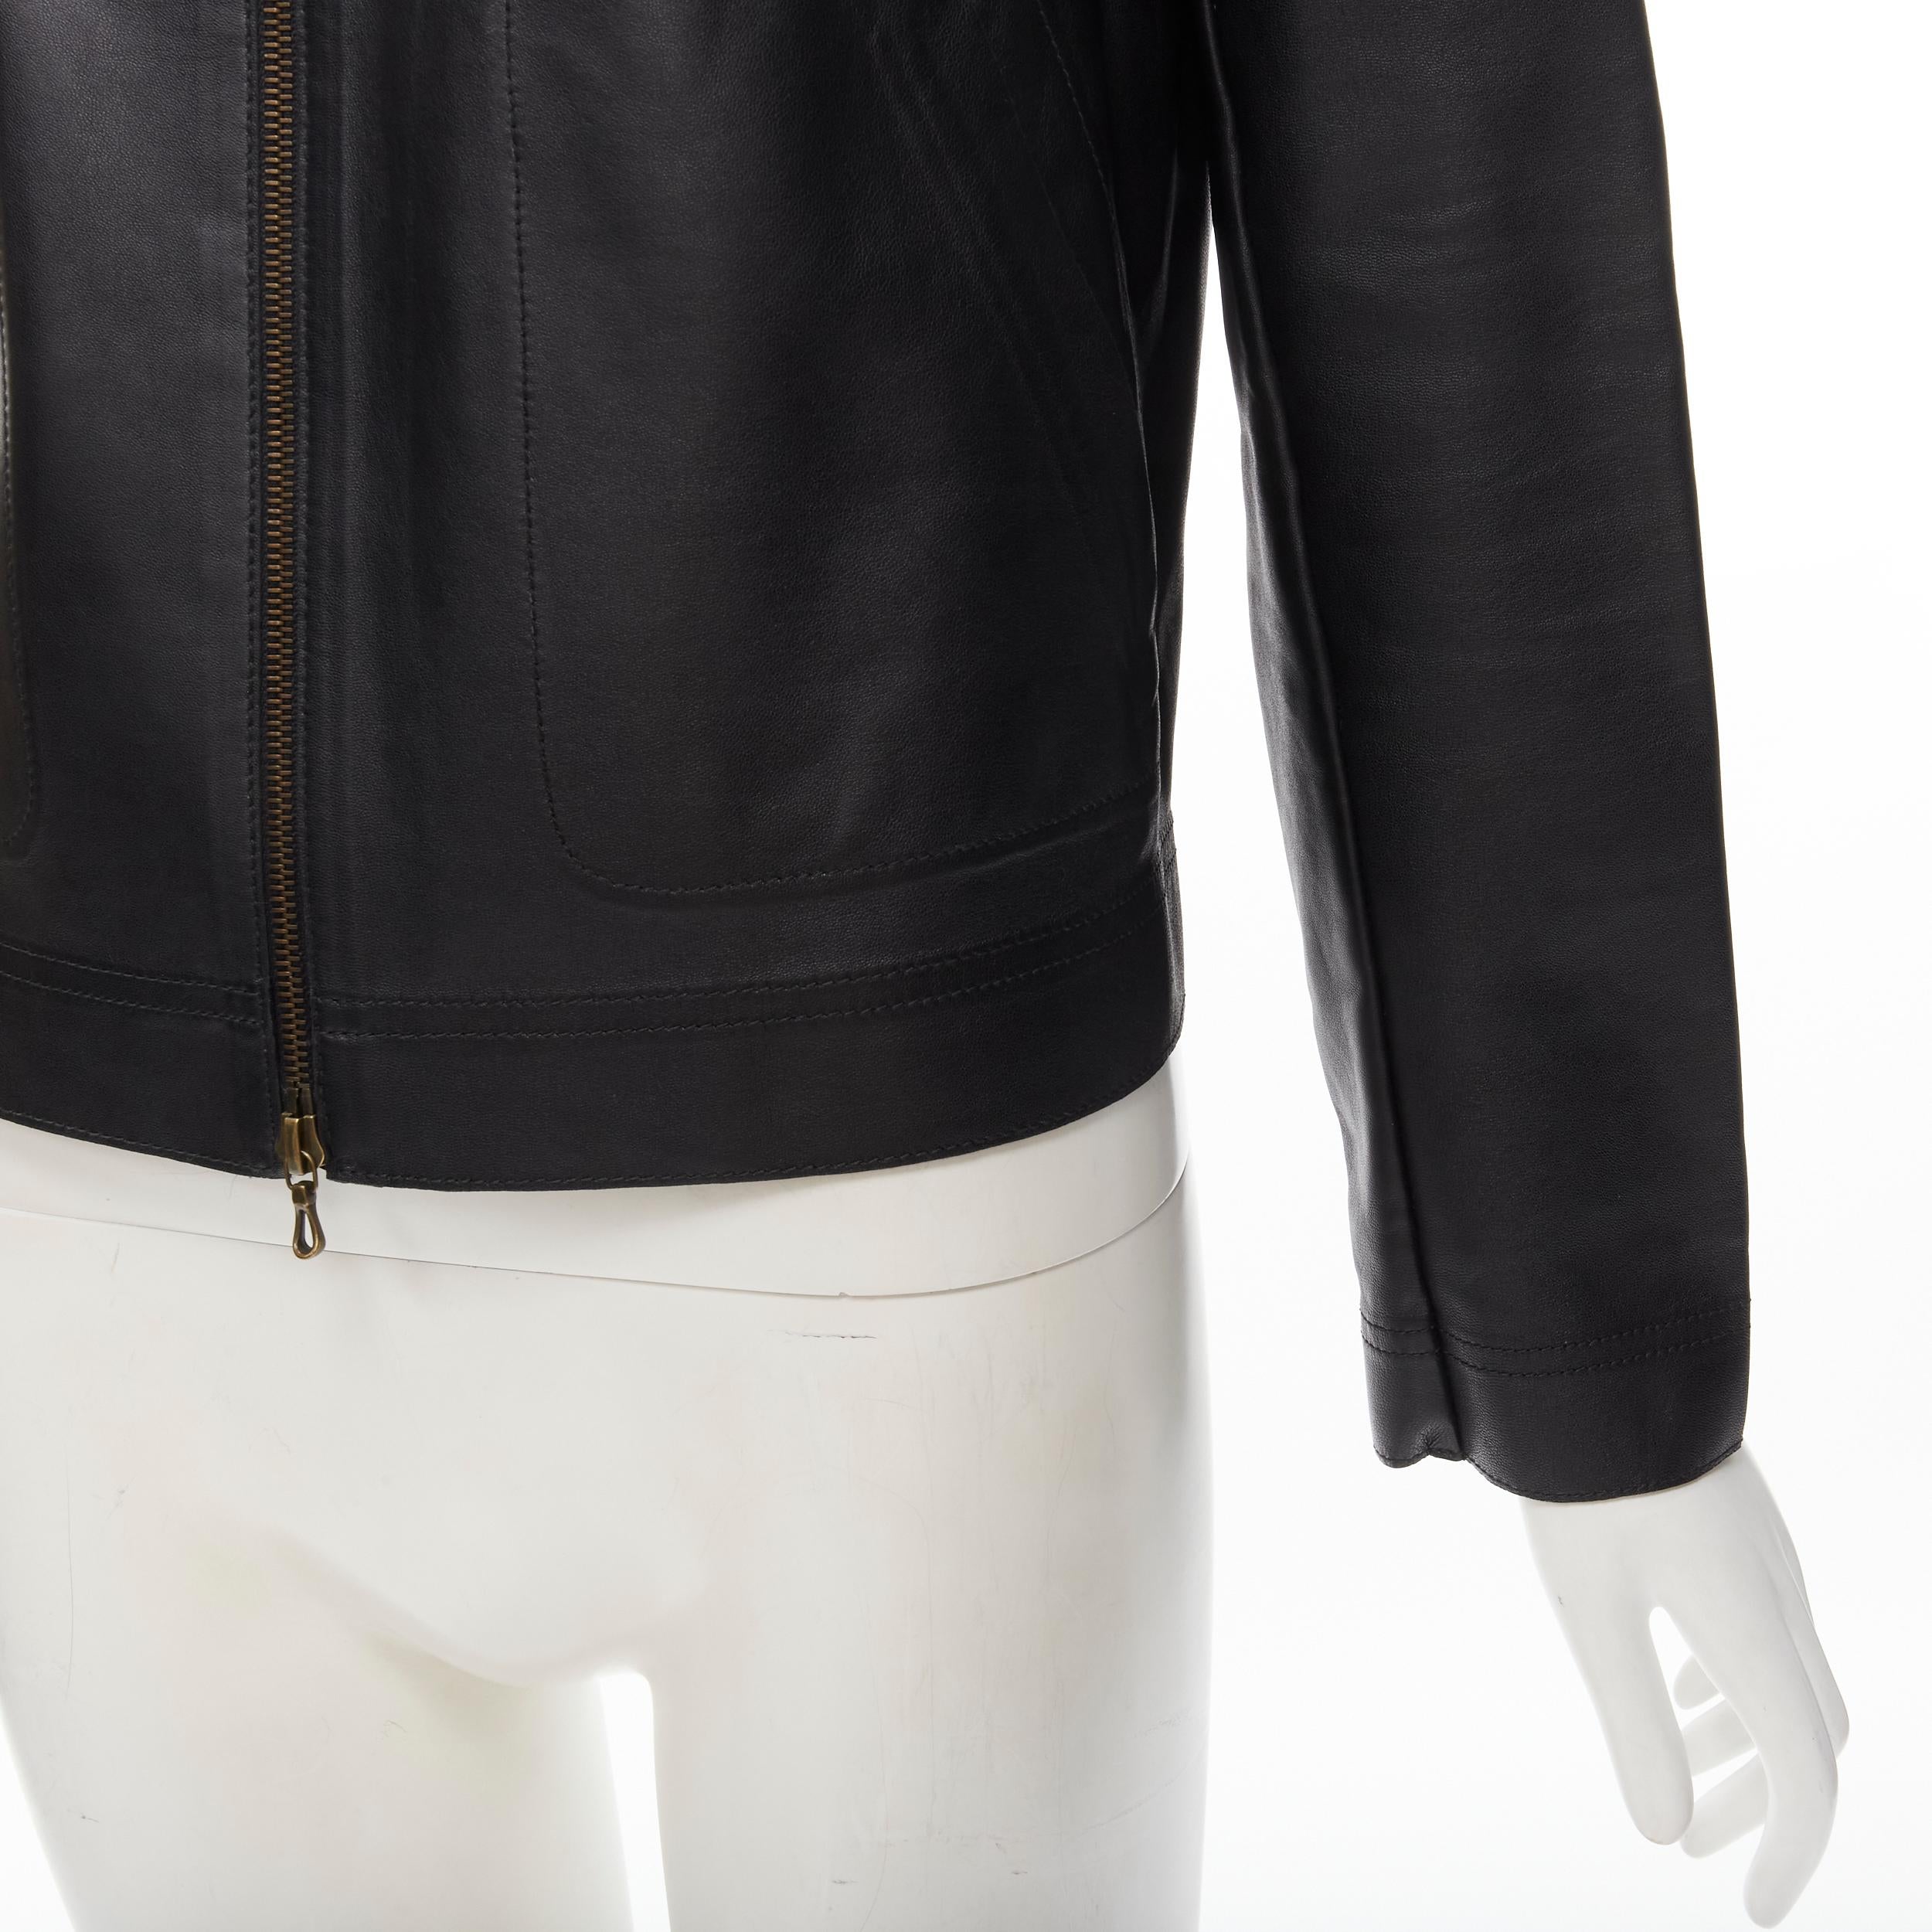 LANVIN 2014 Alber Elbaz black lambskin leather perforated 4 pocket jacket FR36 S 4